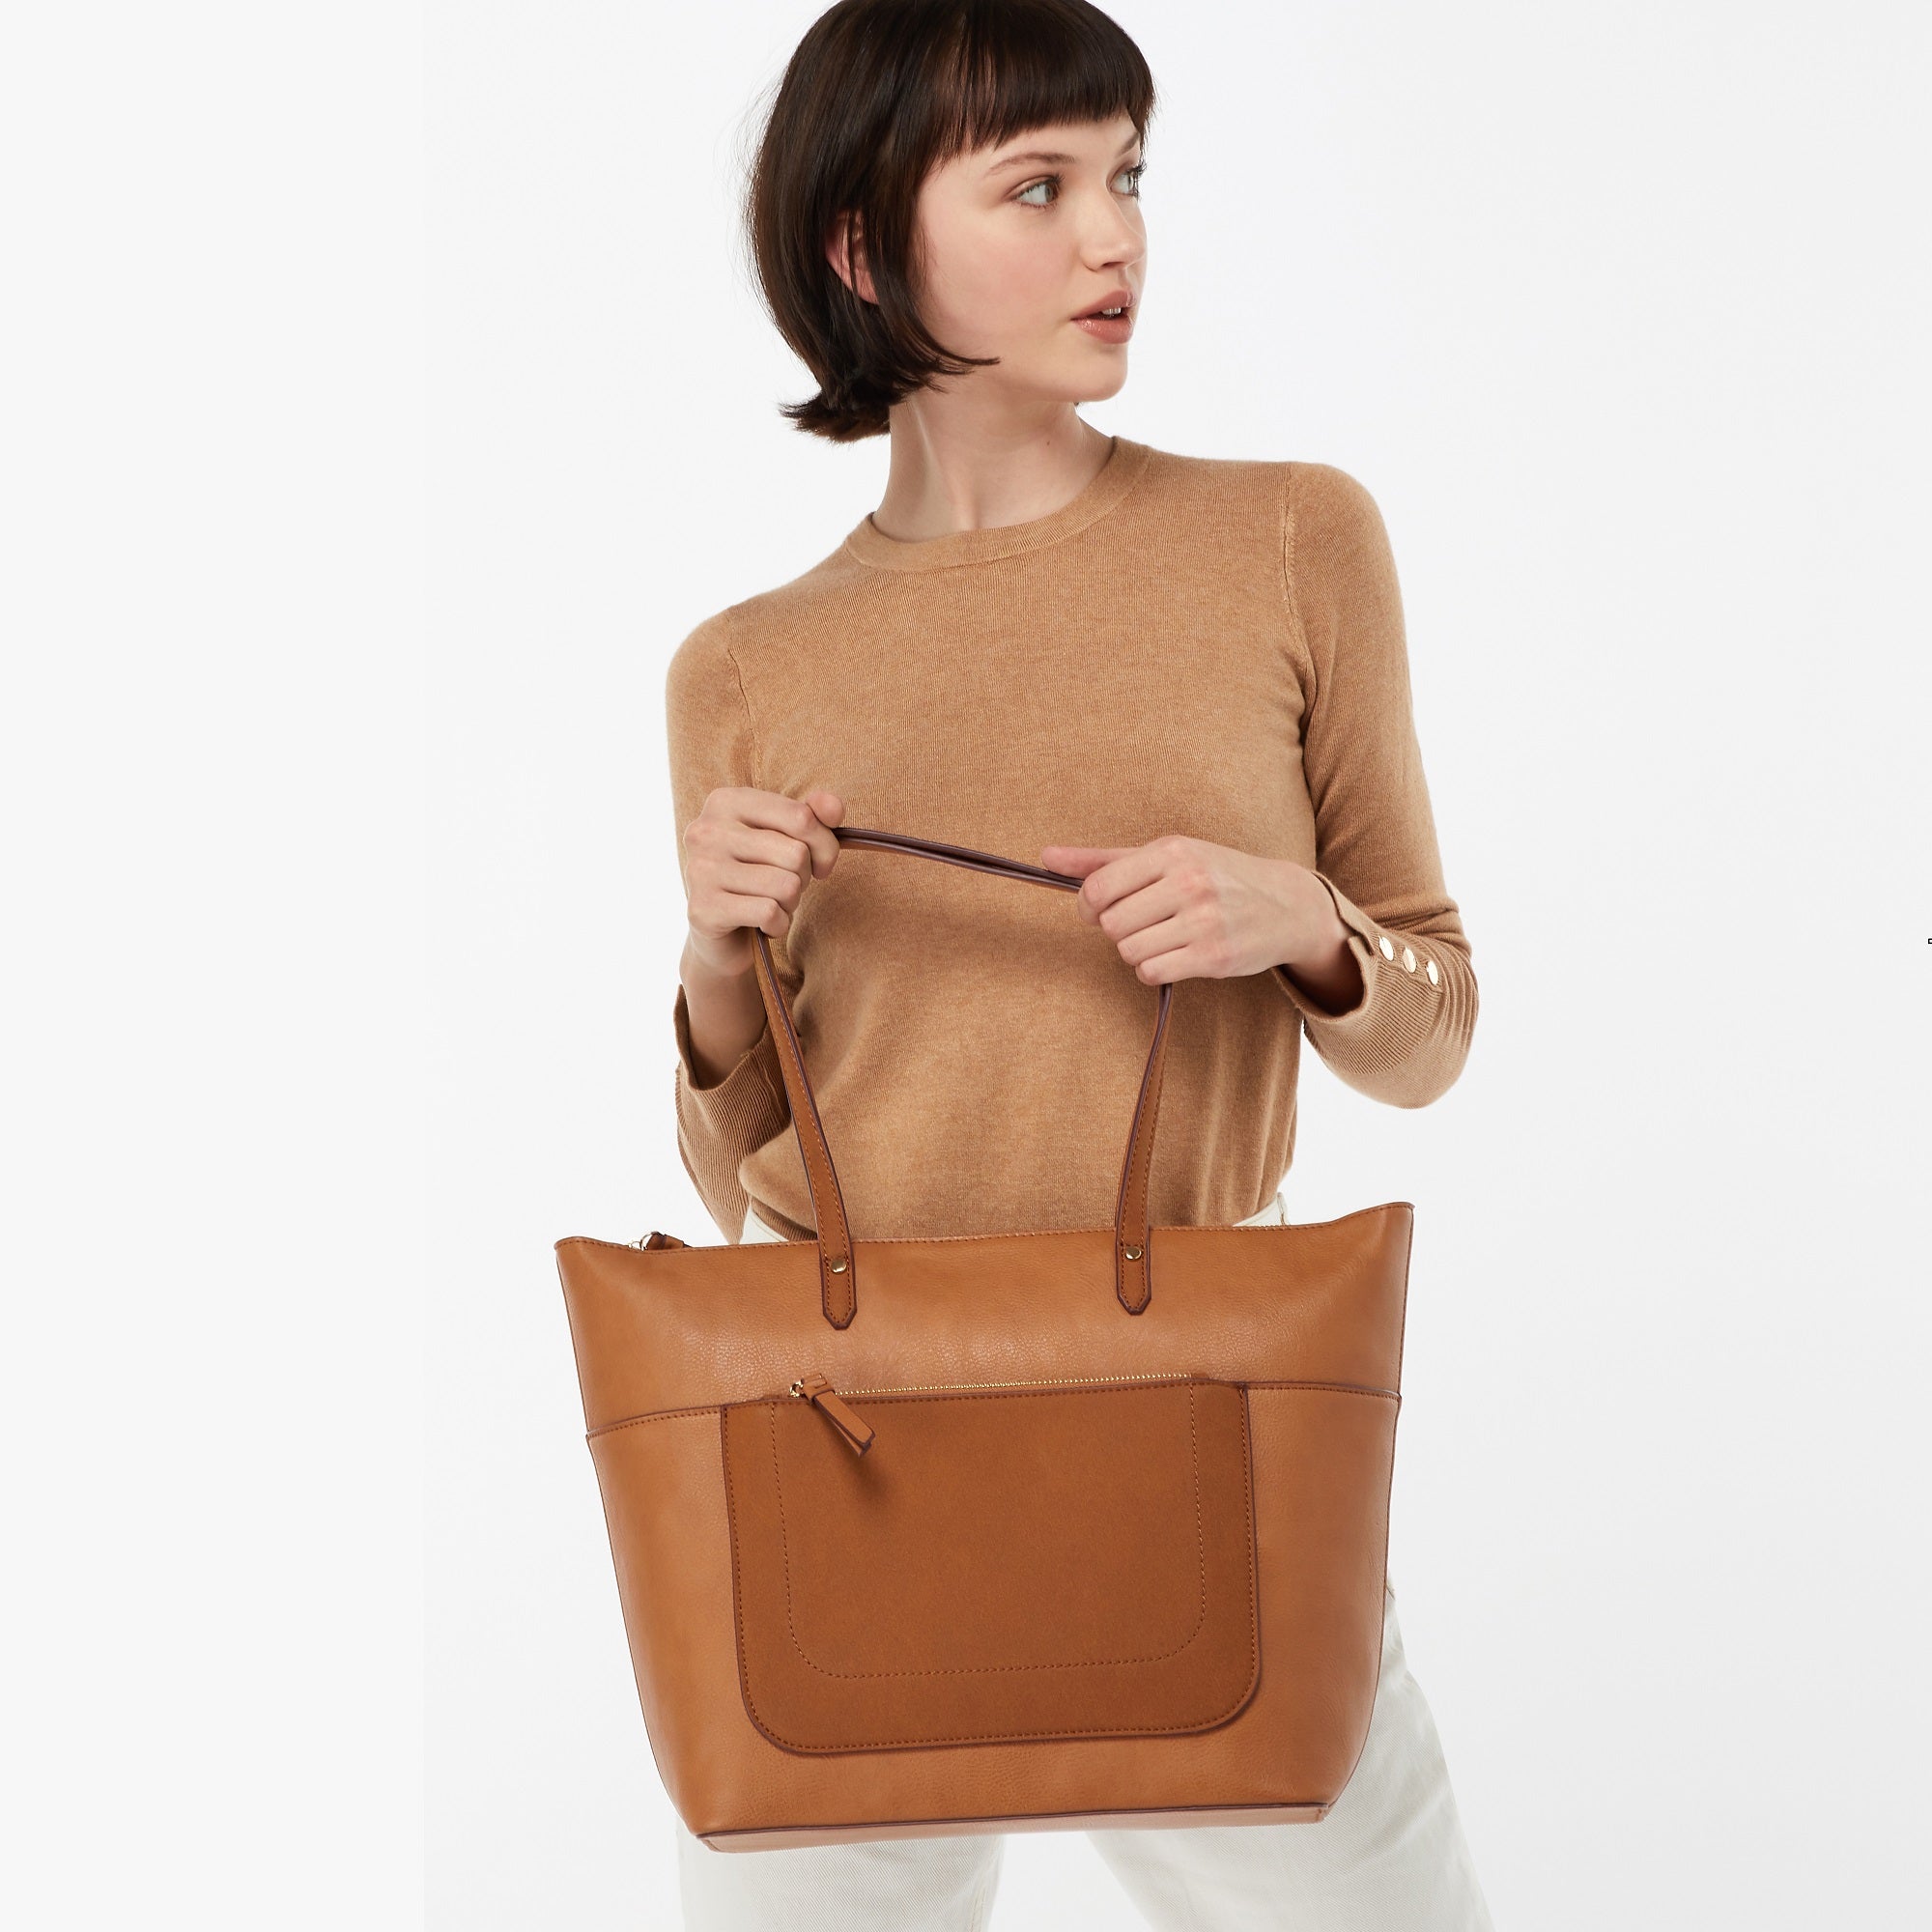 Accessorize London Women's Faux Leather Tan Spacious Emily Tote Bag